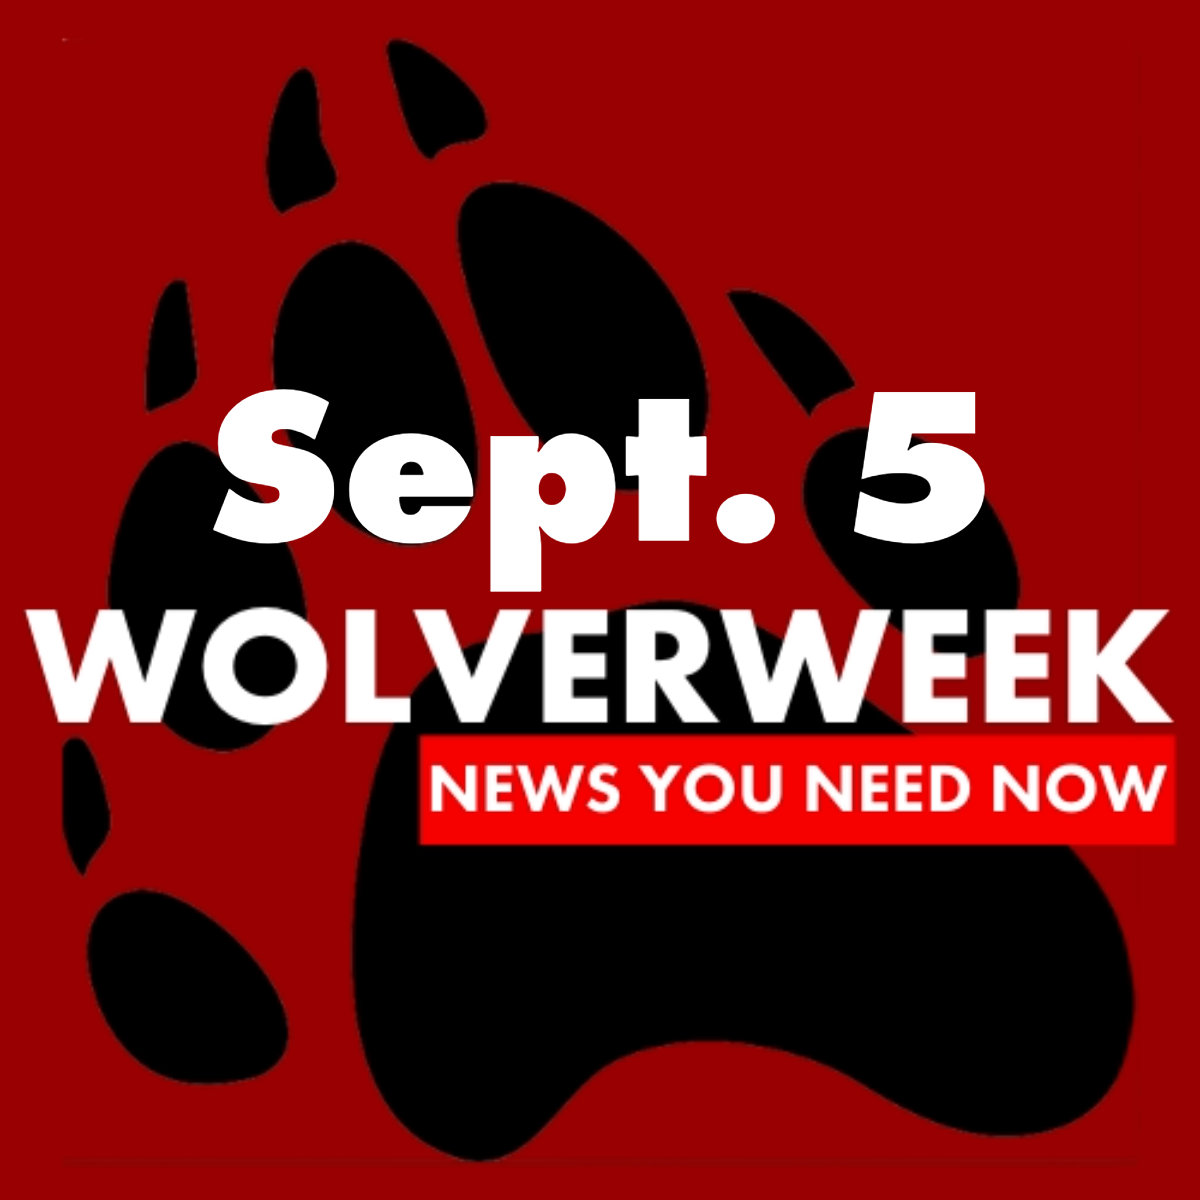 Wolverweek 9/5